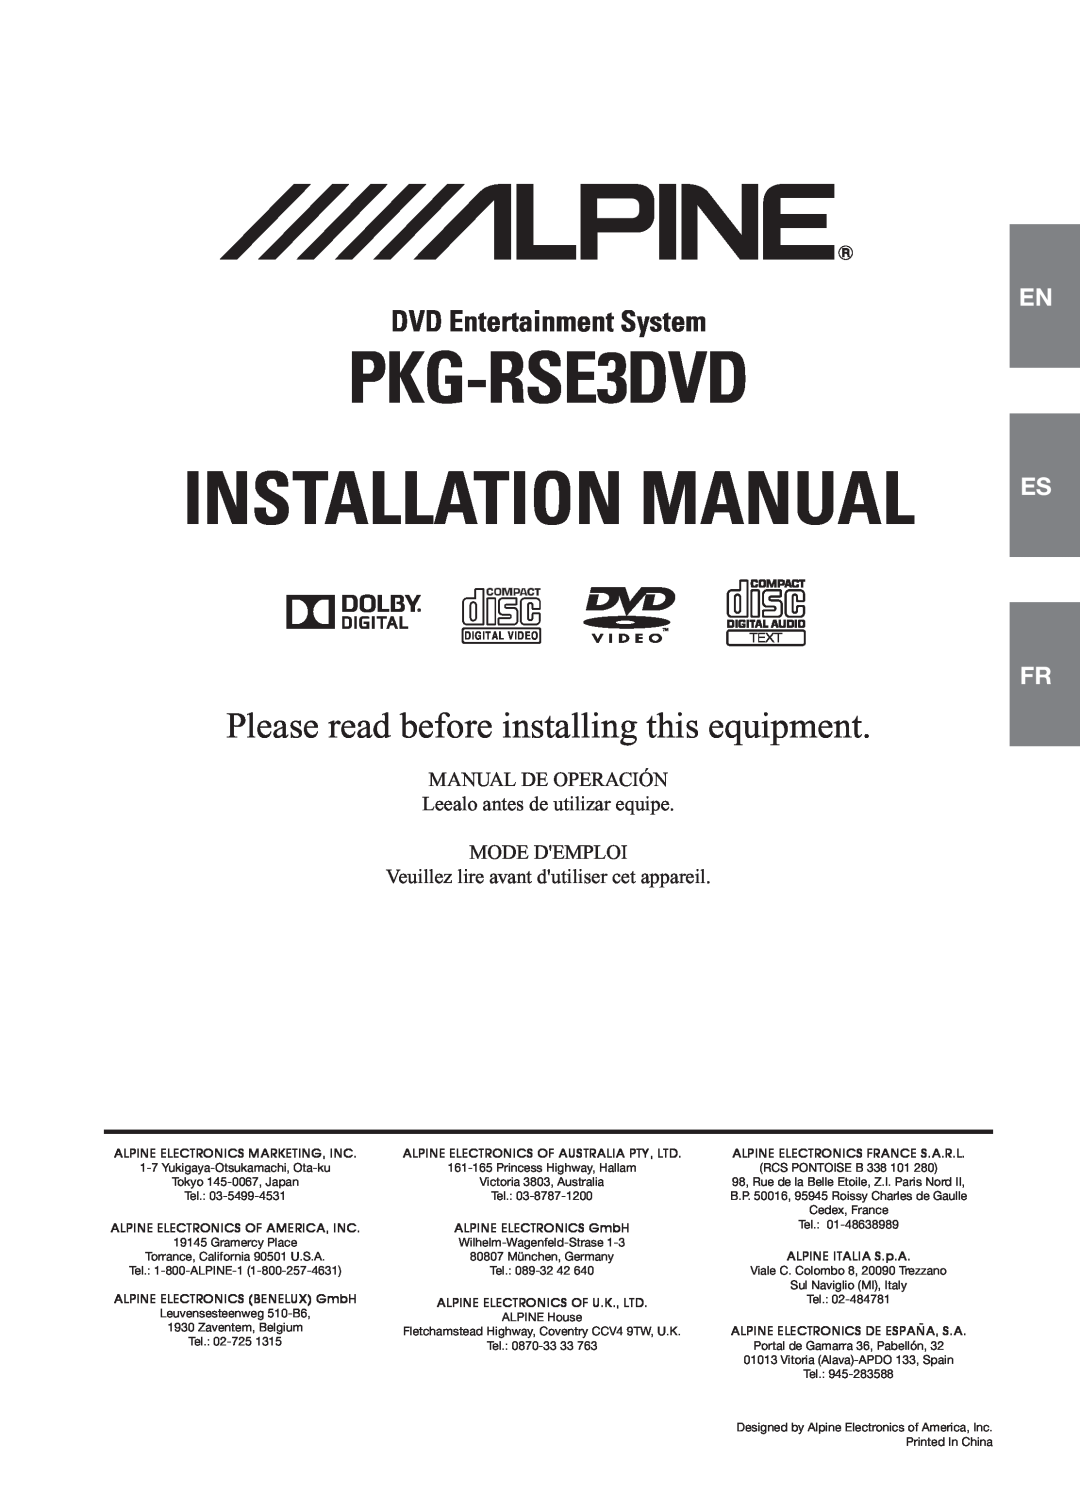 Alpine PKG-RSE3DVD installation manual Installation Manual, Please read before installing this equipment 